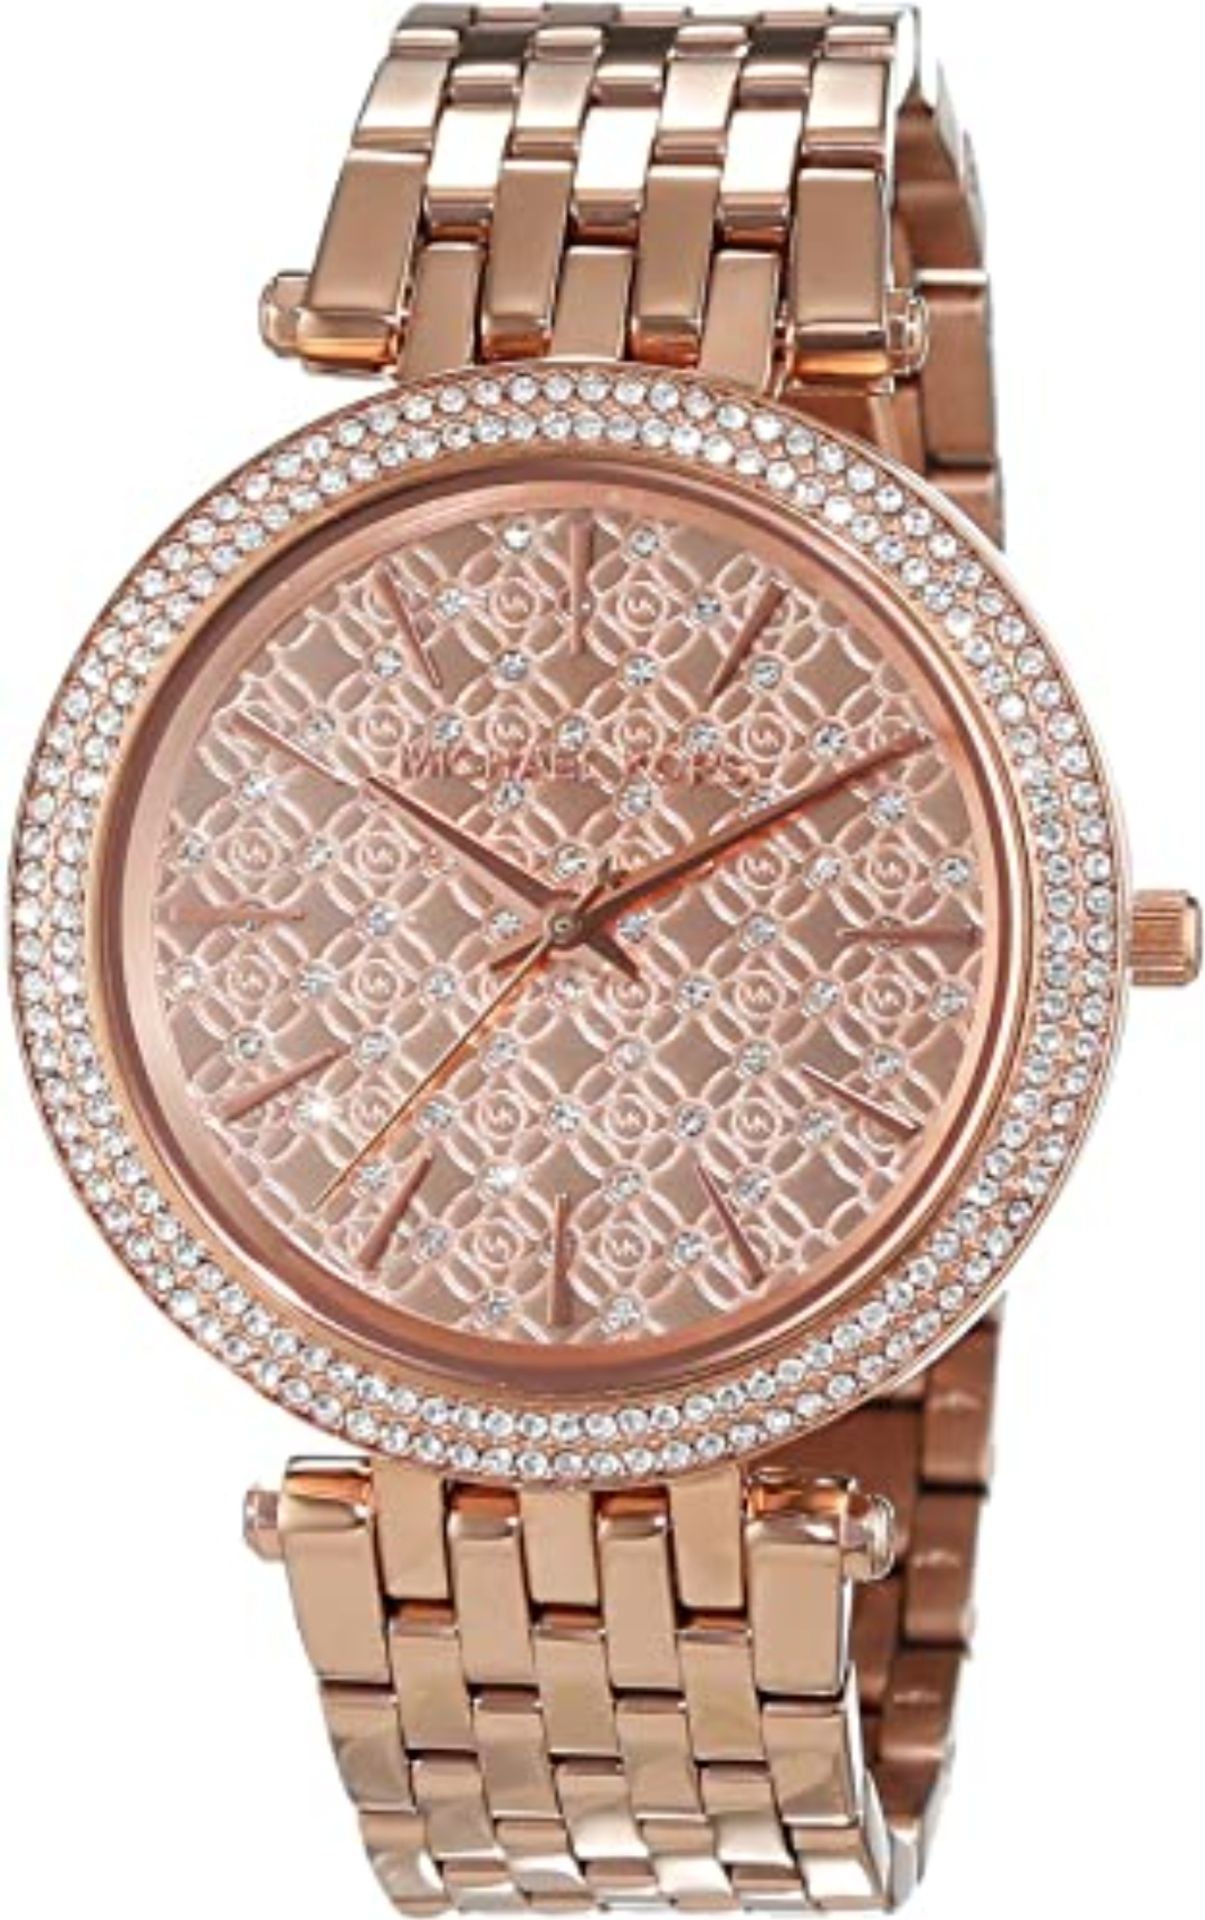 Michael Kors MK3399 Darci Rose Gold Crystal Bezel Ladies Watch - Image 2 of 8